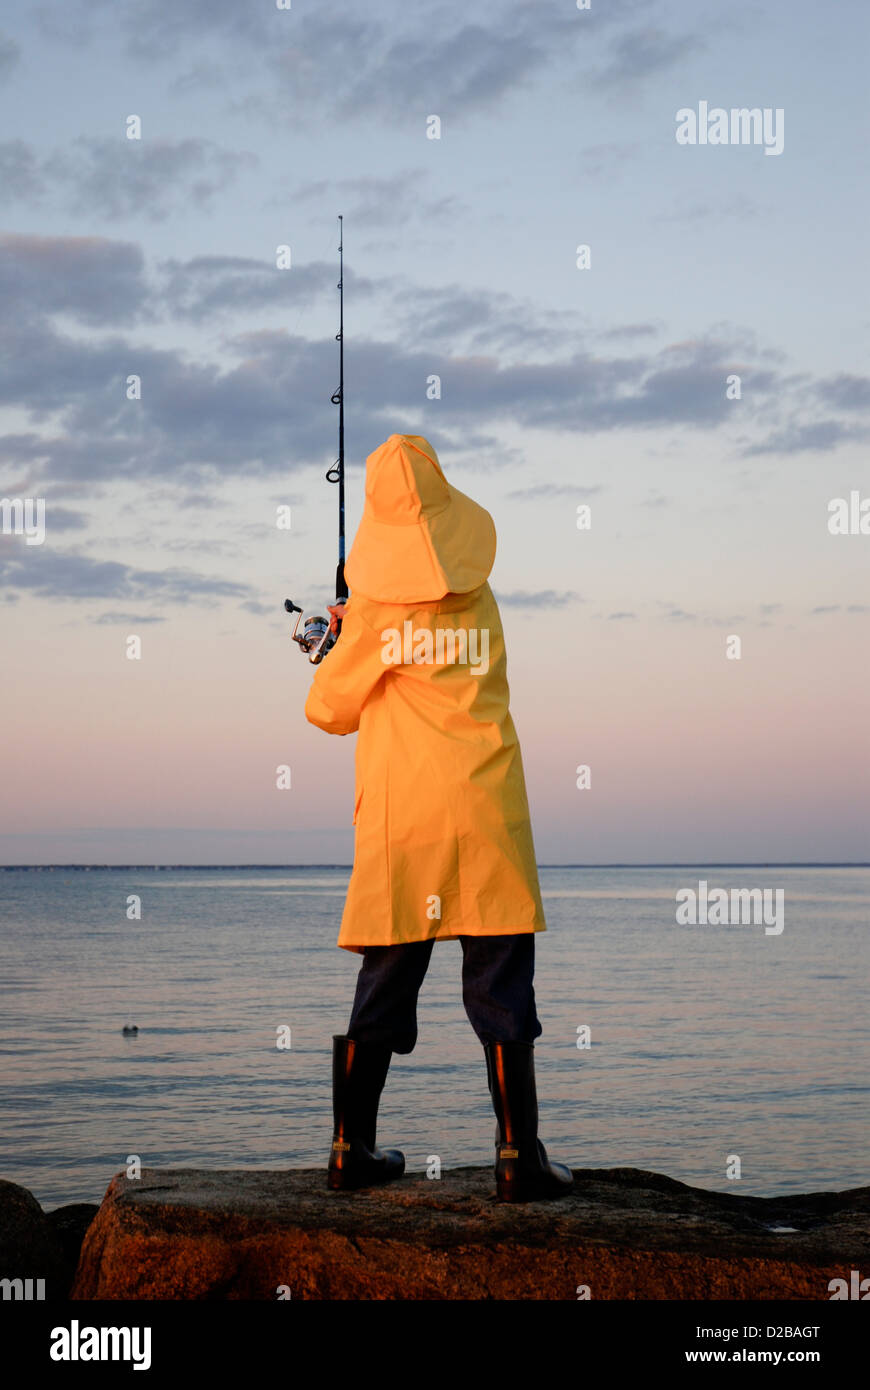 https://c8.alamy.com/comp/D2BAGT/boy-with-fishing-gear-in-yellow-slicker-marthas-vineyard-D2BAGT.jpg